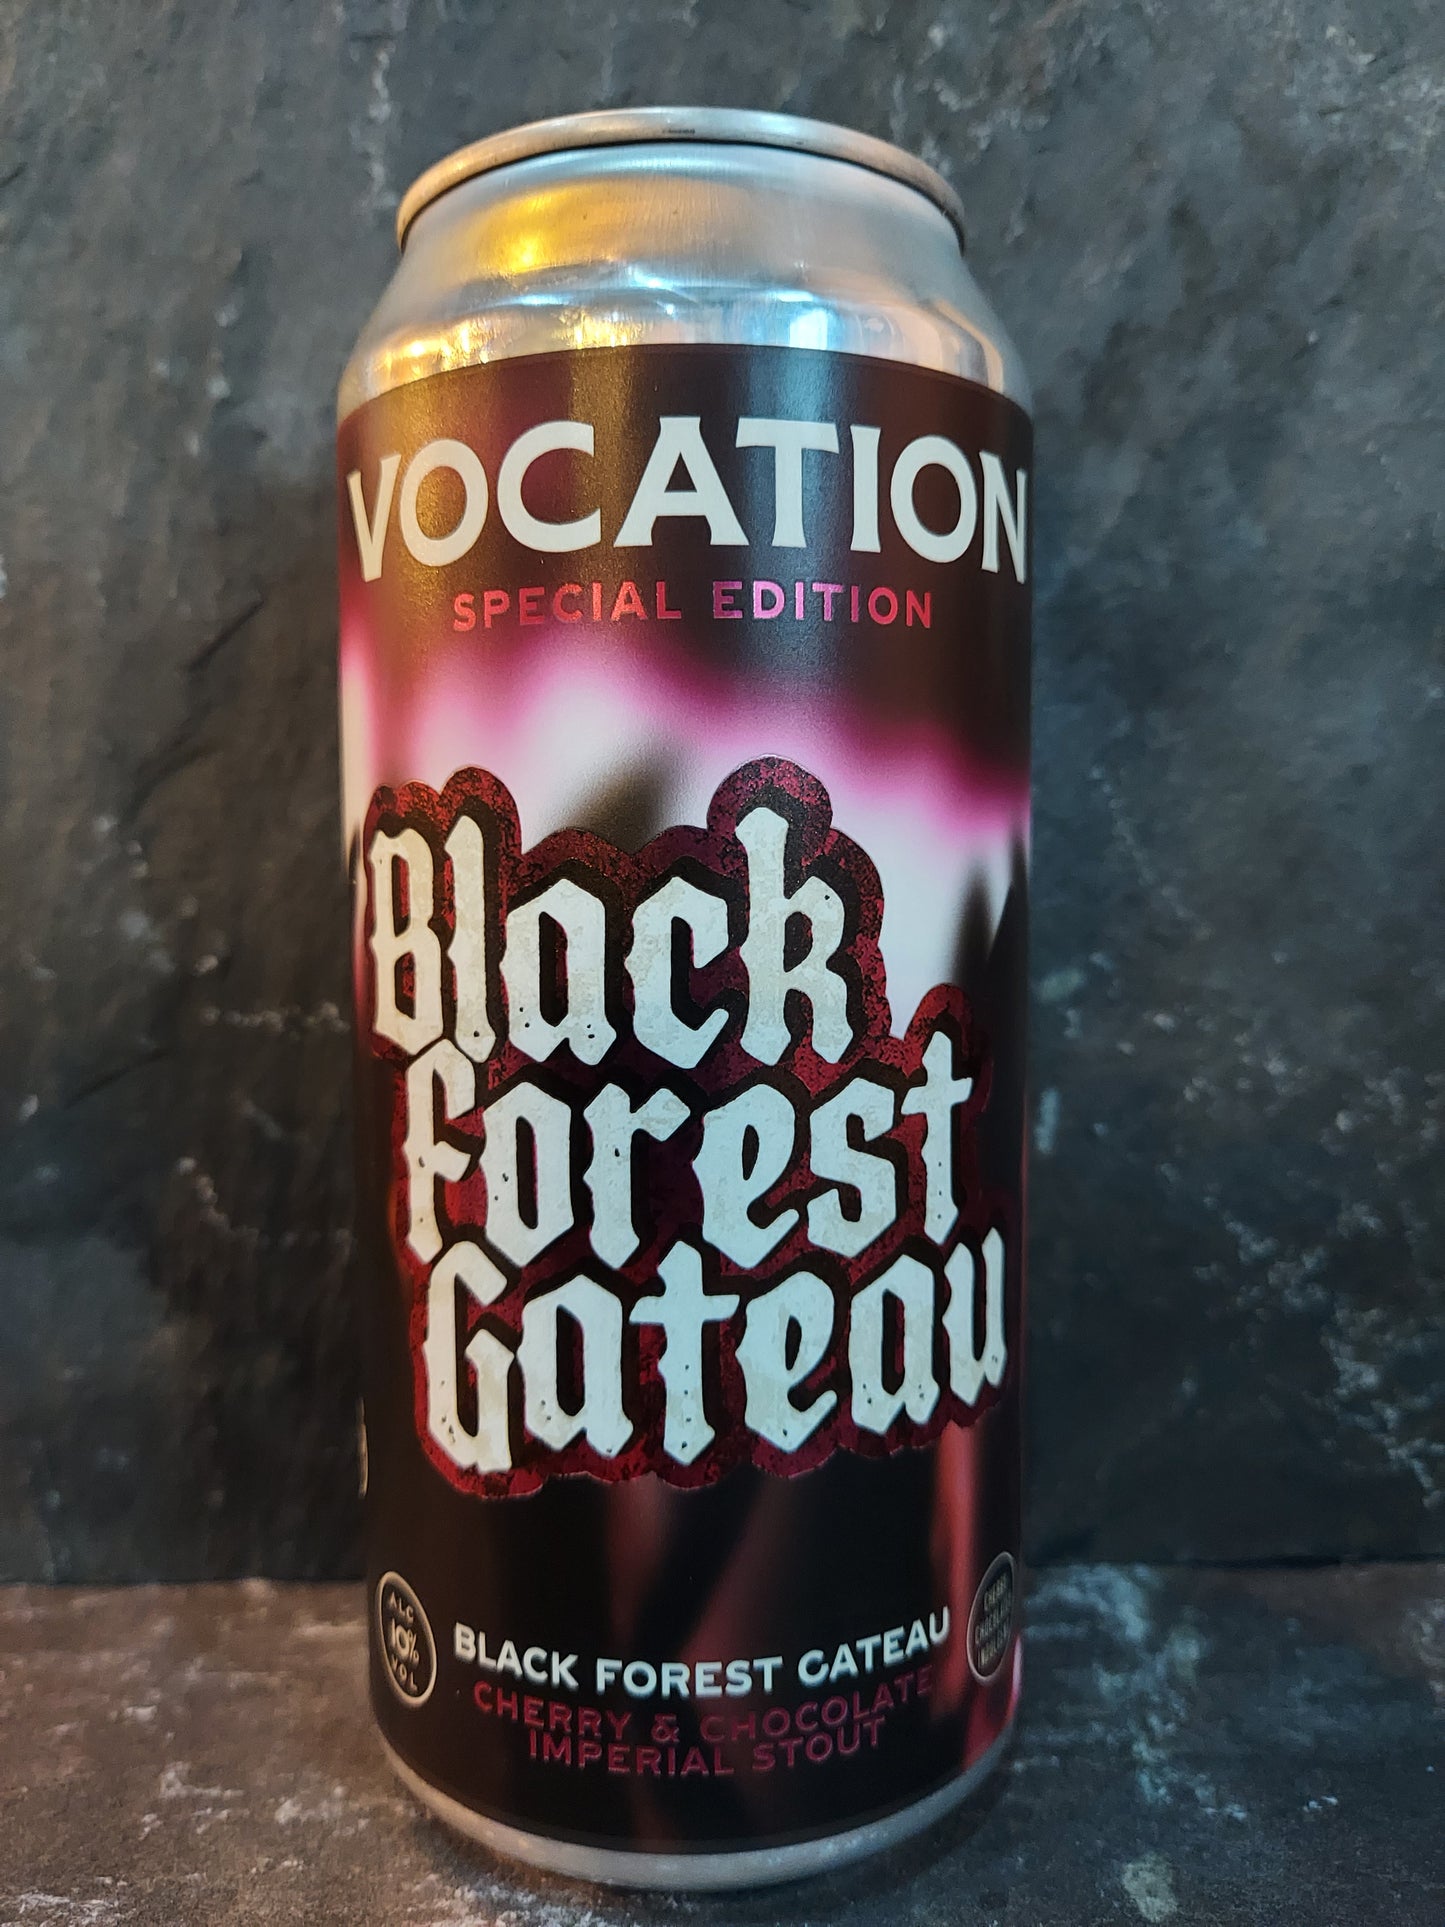 Black Forest Gateau - Vocation